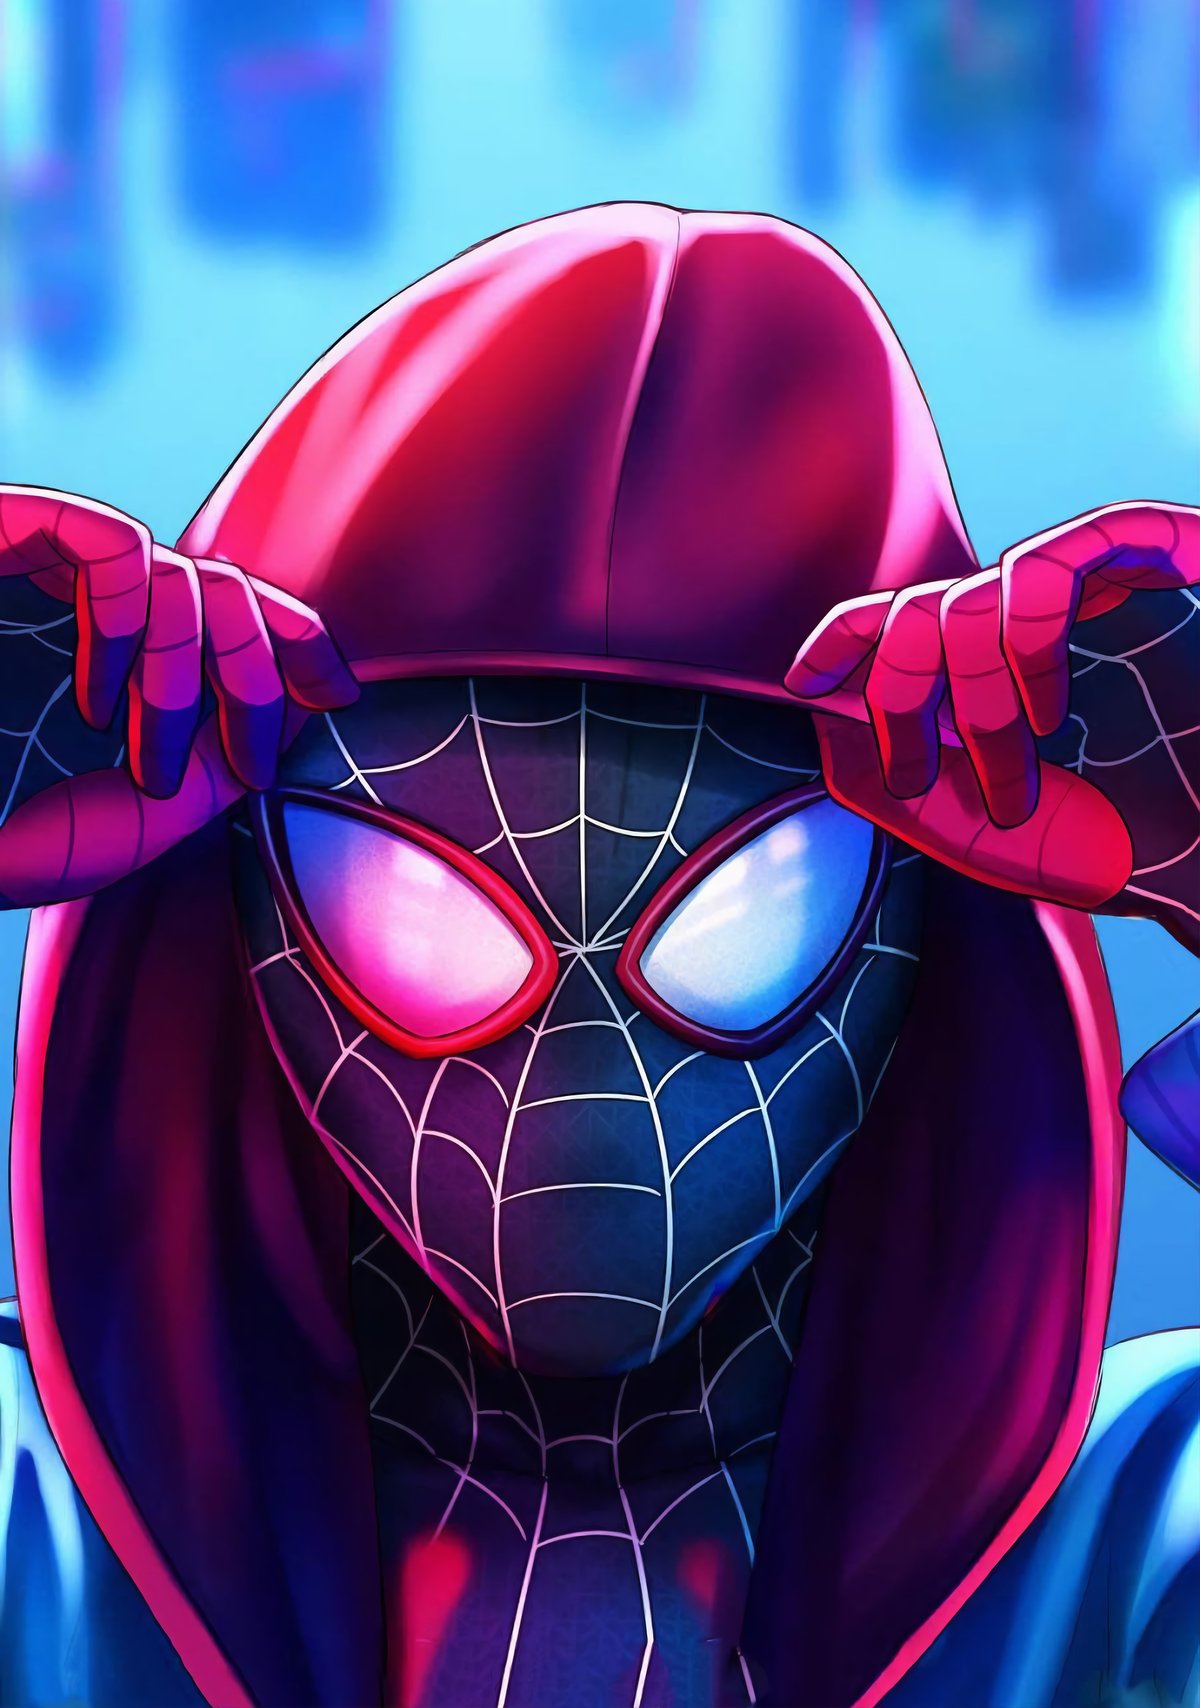 Spider Man ( Miles Morales ) Poster